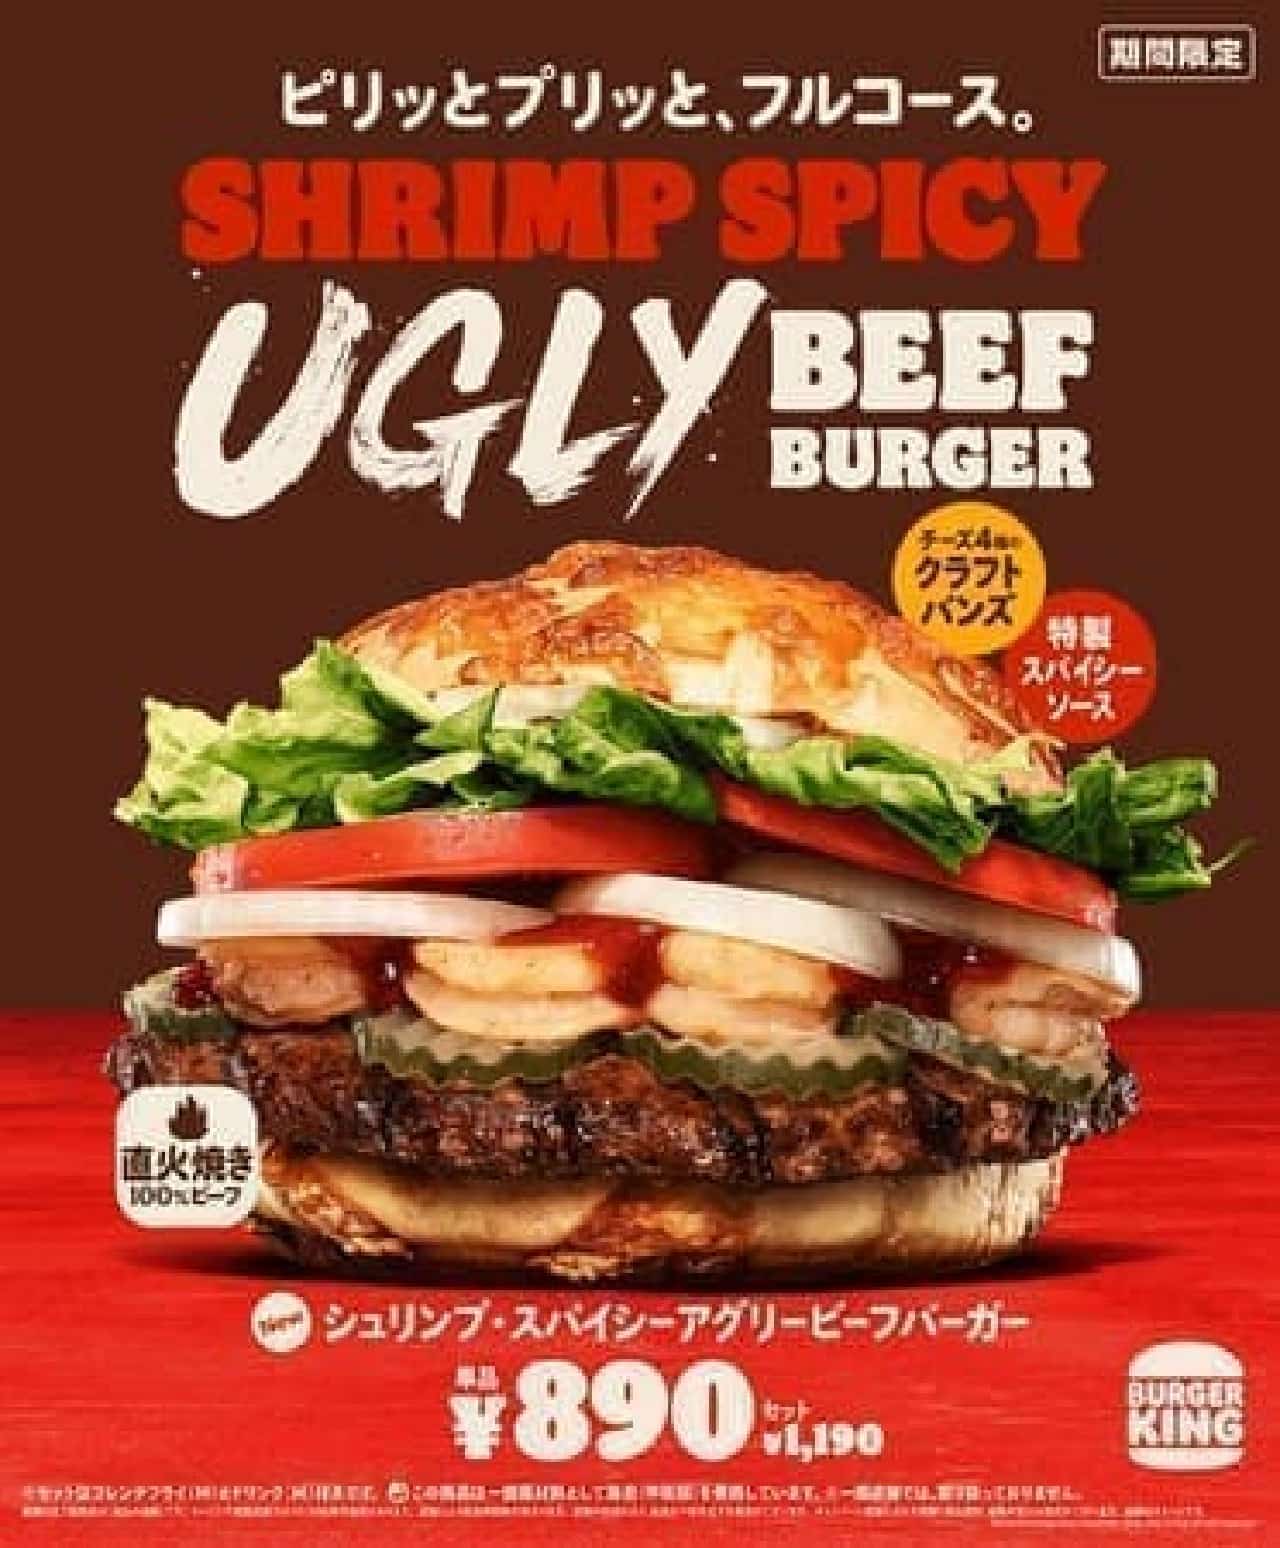 Burger King "Shrimp Spicy Agri Beef Burger"